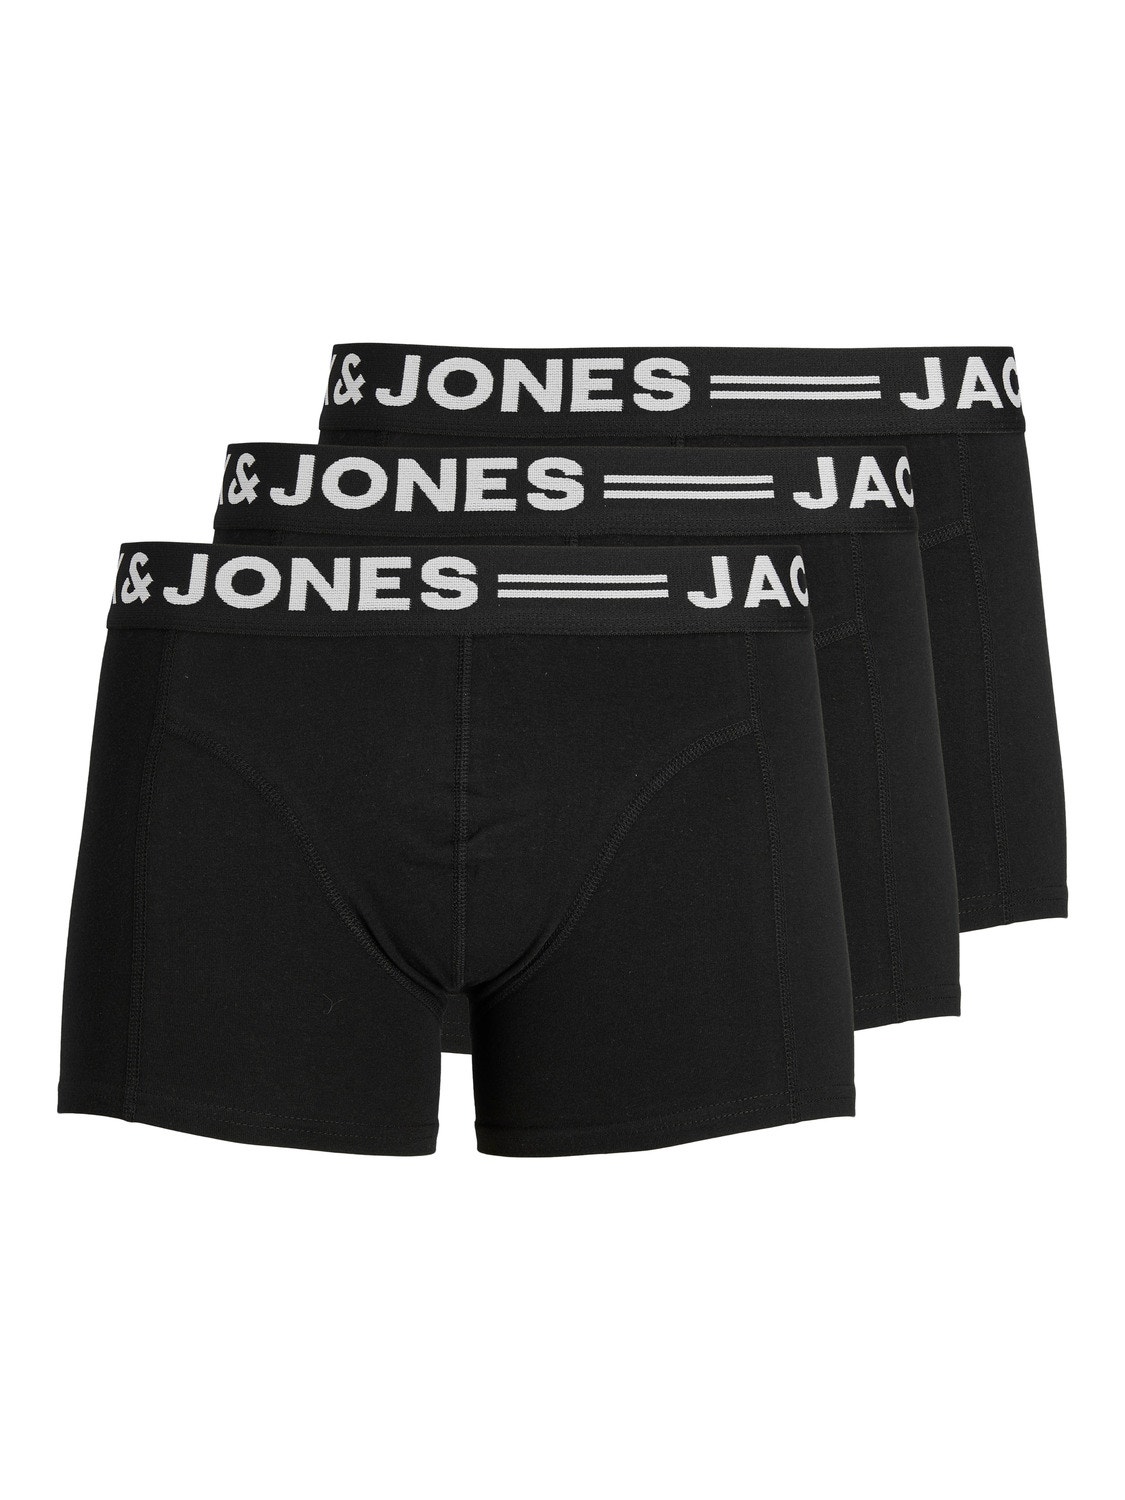 Jack & Jones 3-pak Trunks -Black - 12081832